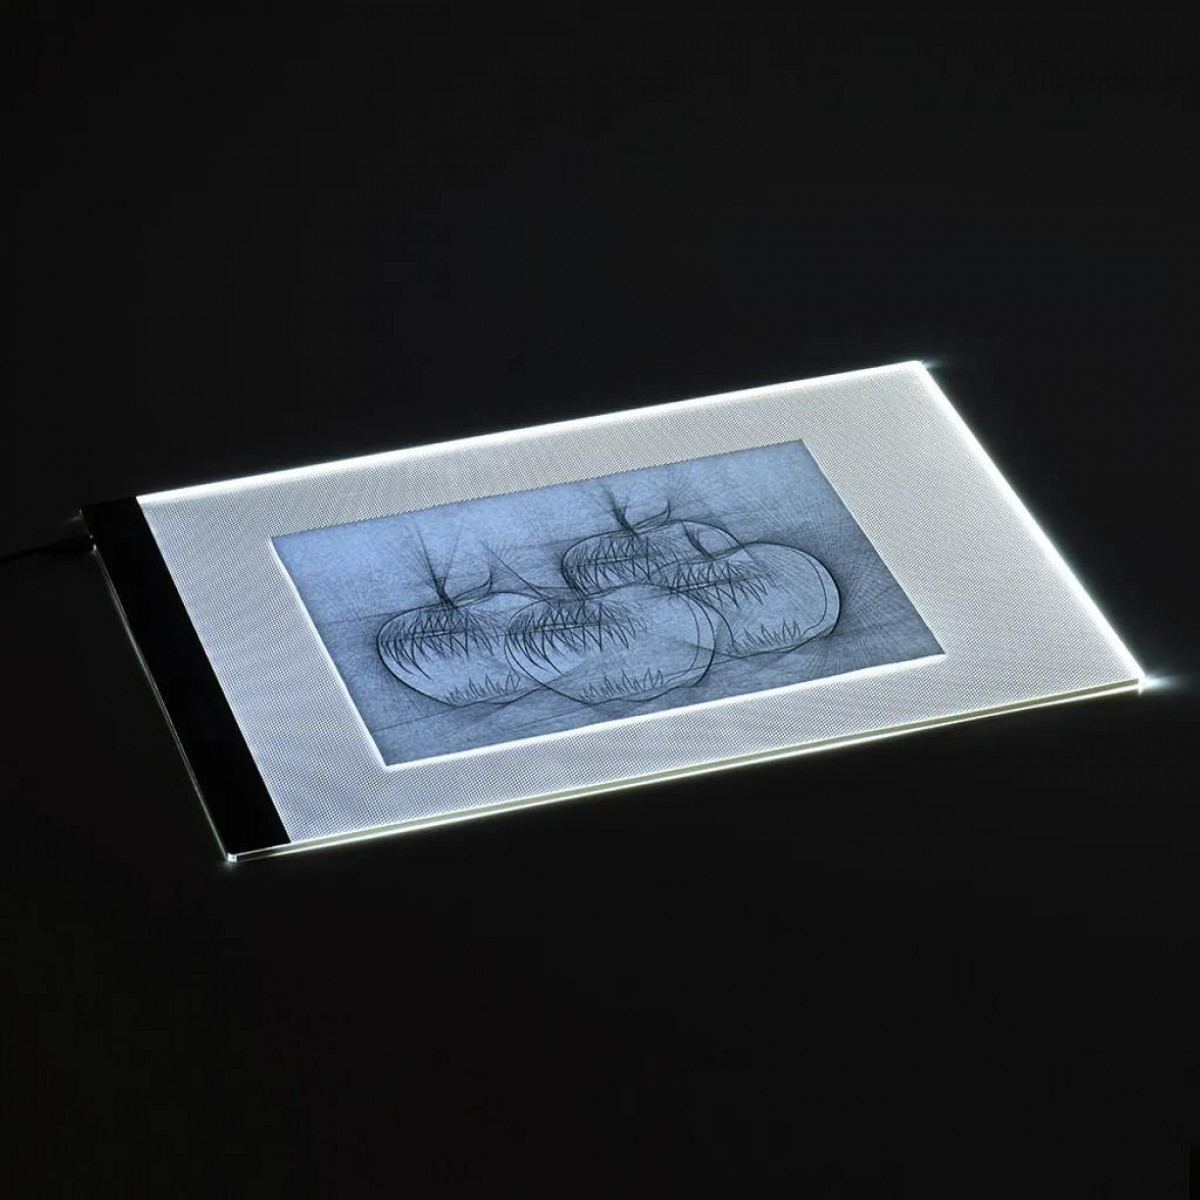 INF LED Zeichenbrett A4 USB mit Leuchttisch Grafiktablett